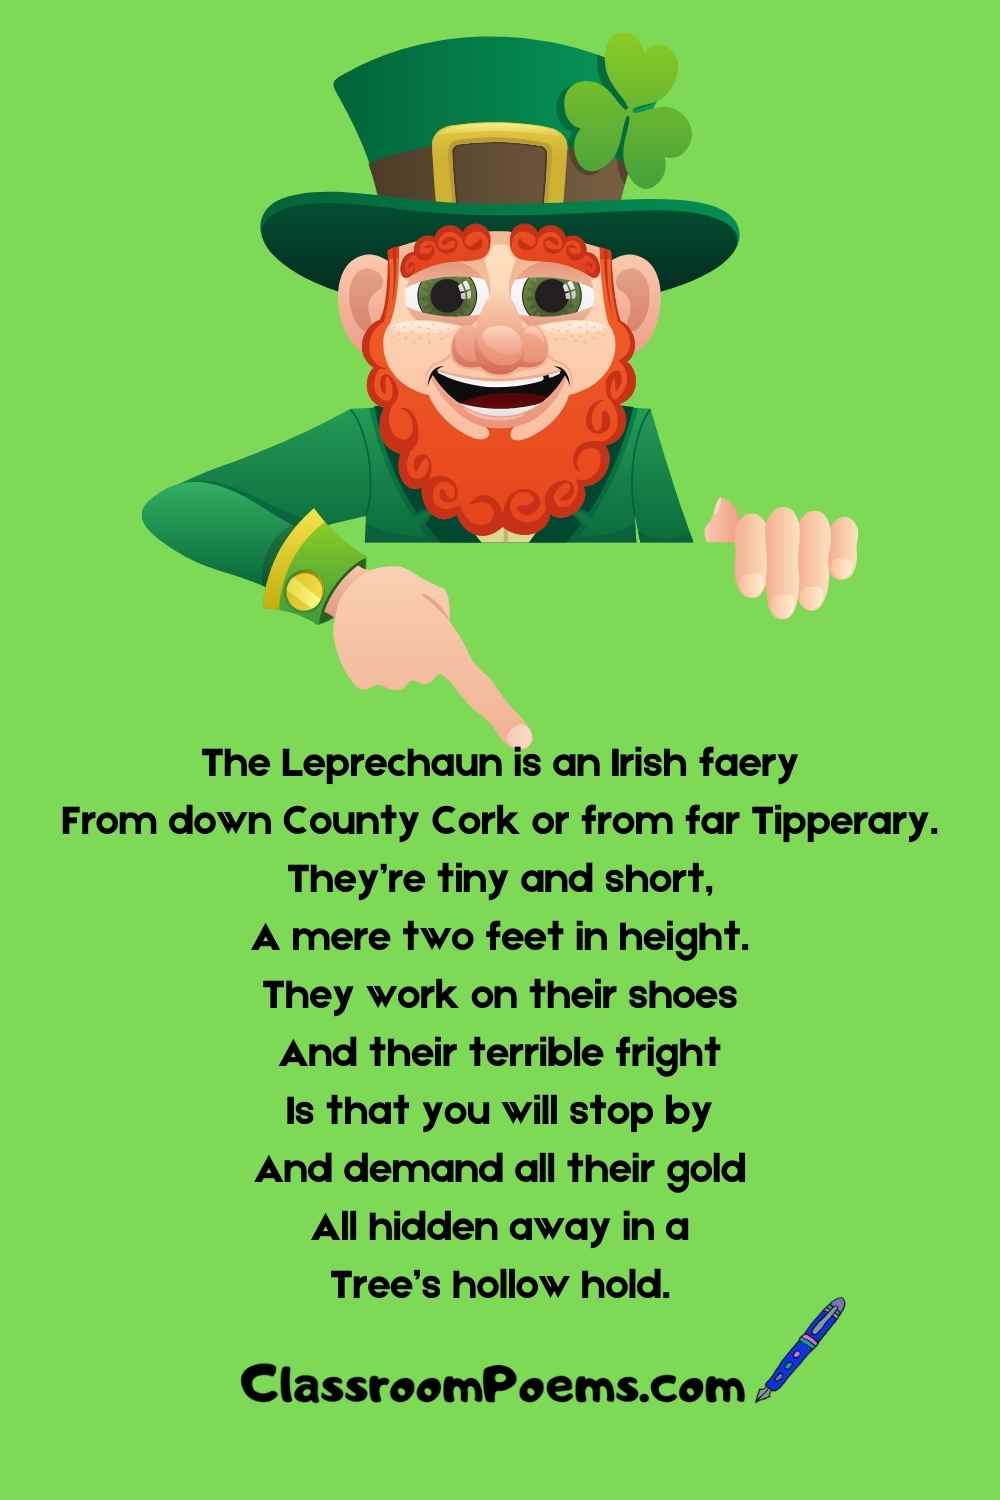 Irish poems for kids on ClassroomPoems.com.